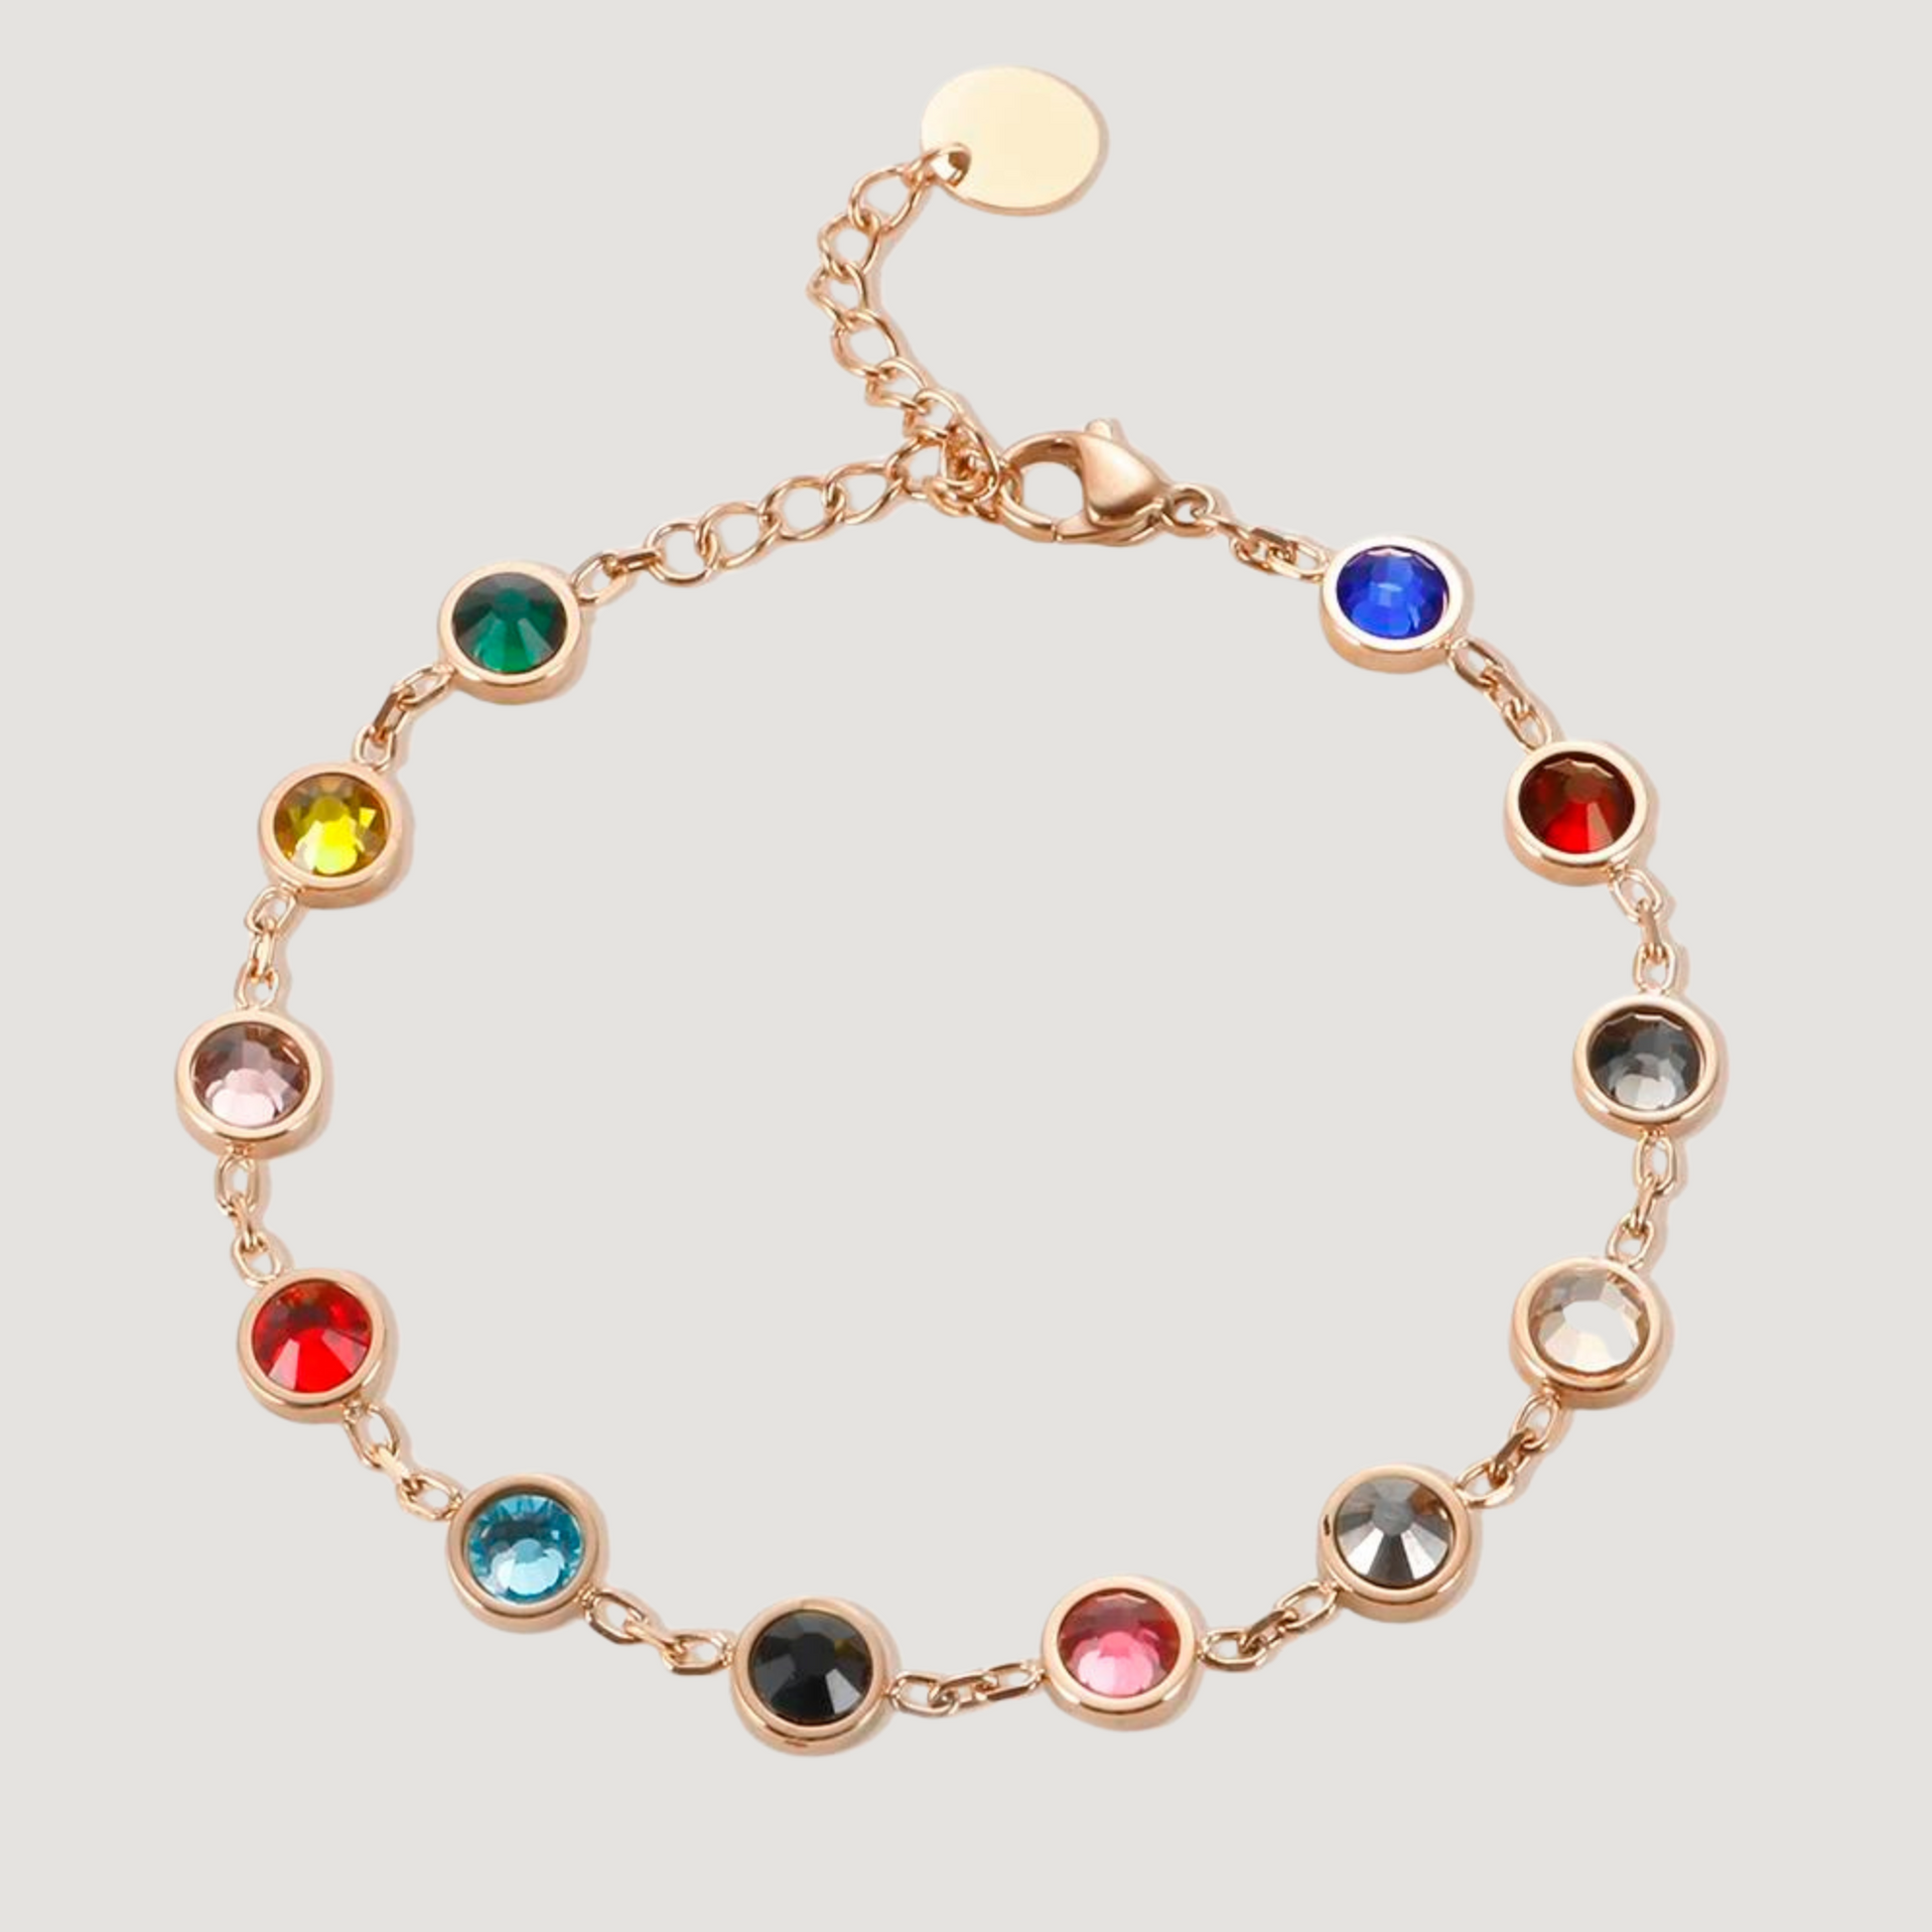 Stainless Steel Bejeweled Bracelet Taylor Swift - Rose Gold Color